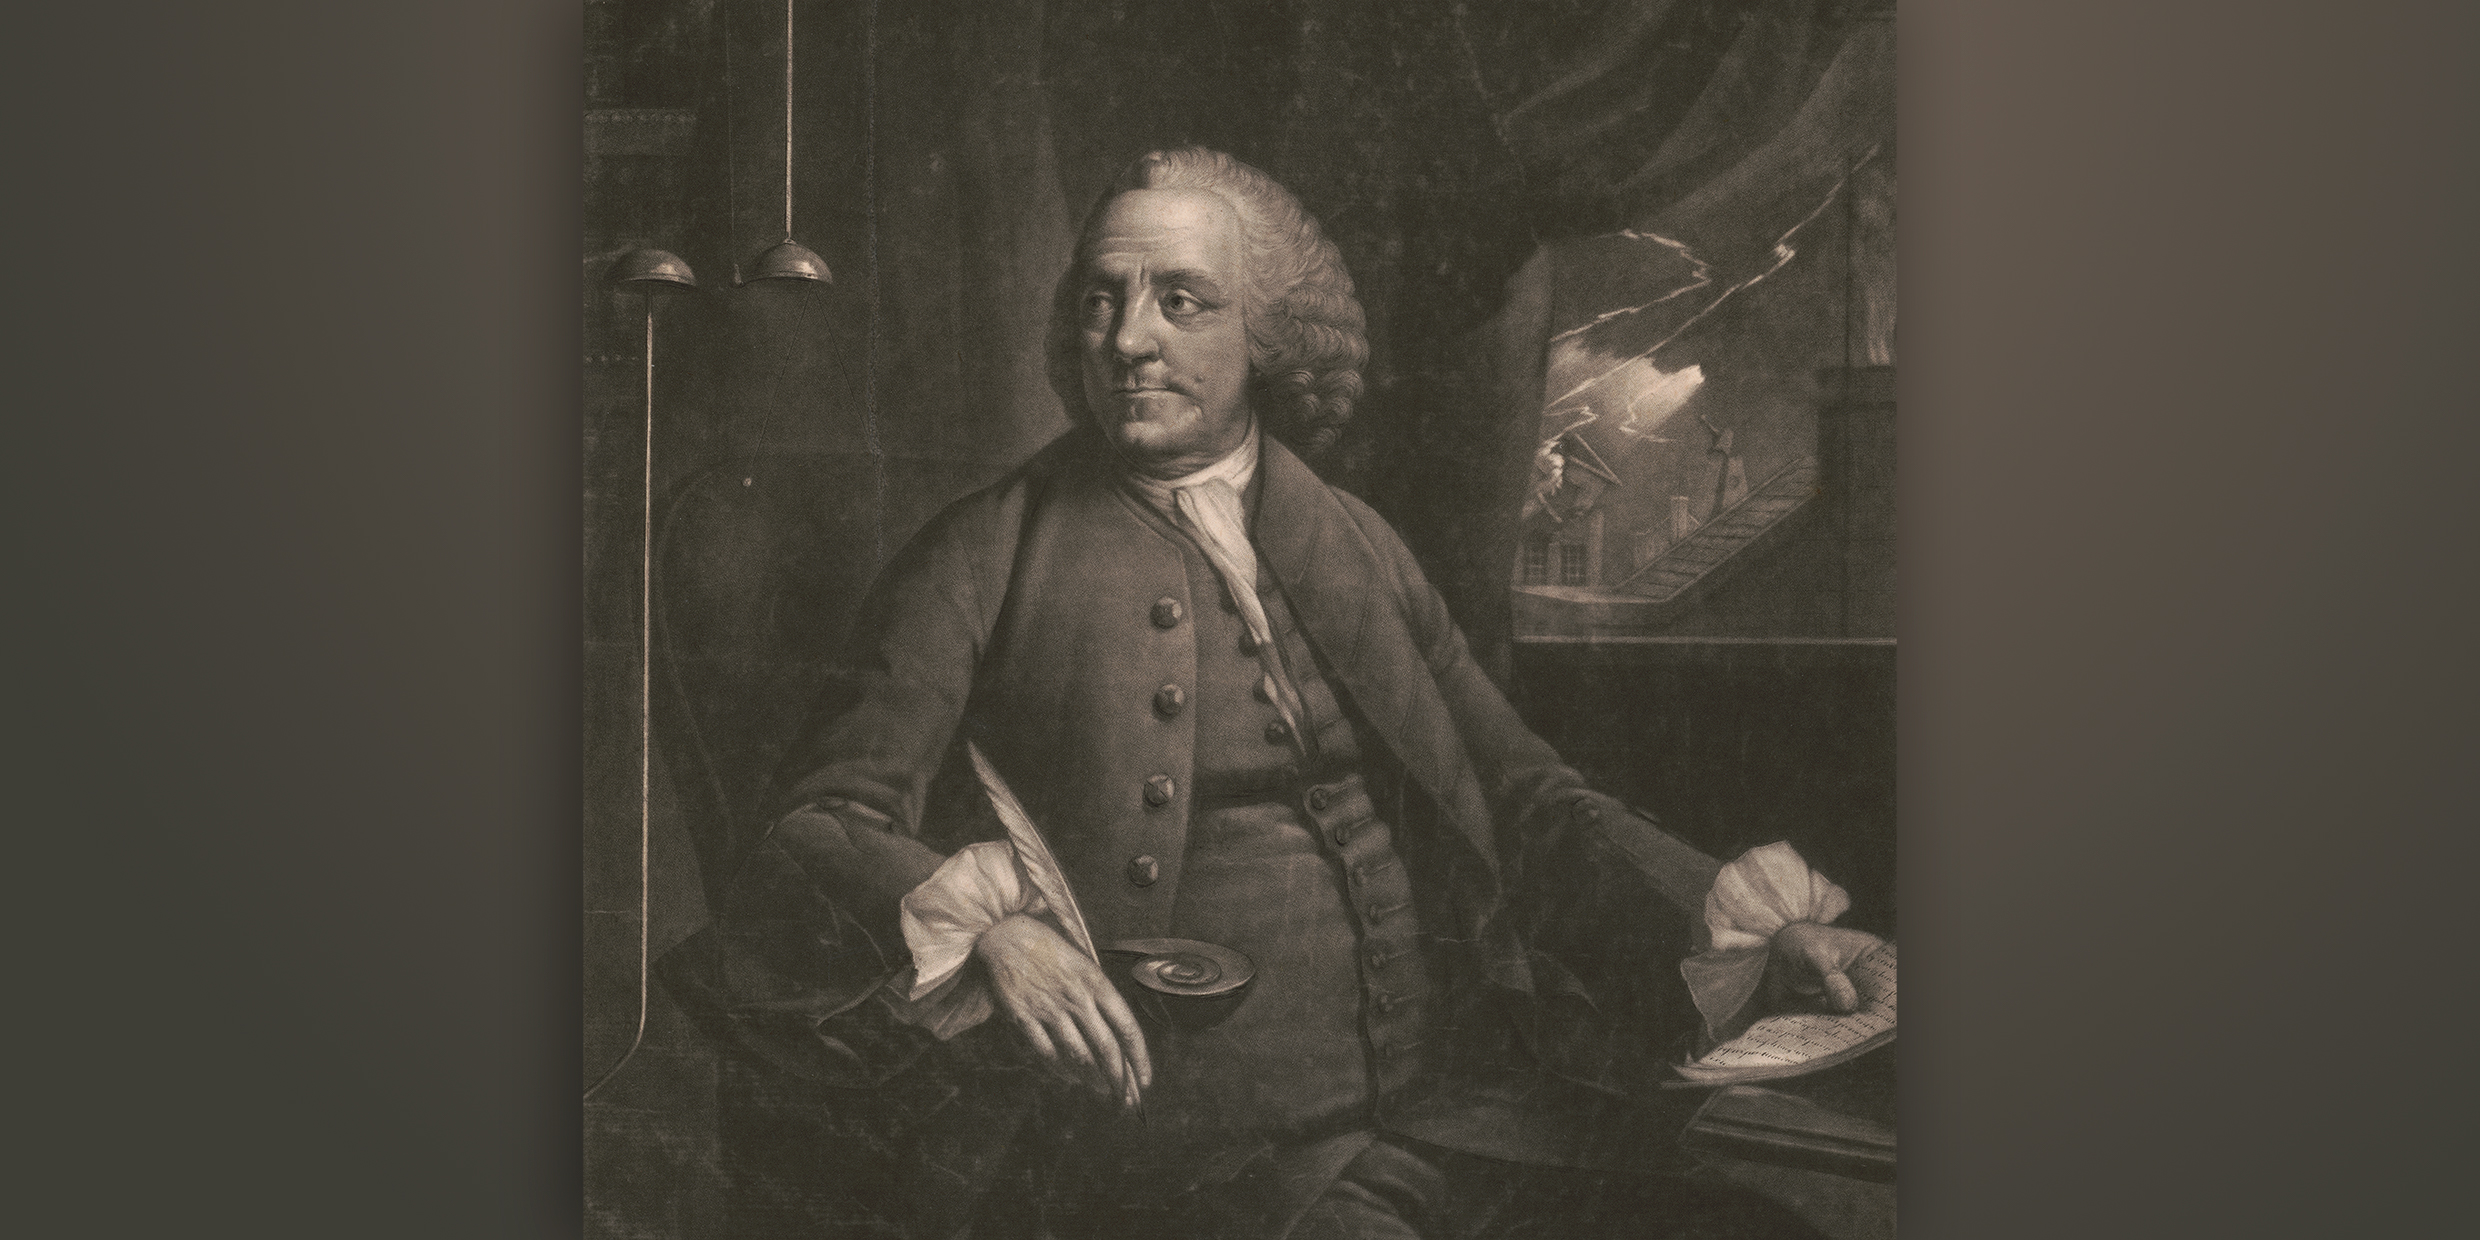 Engraved illustration of Benjamin Franklin seated at his desk